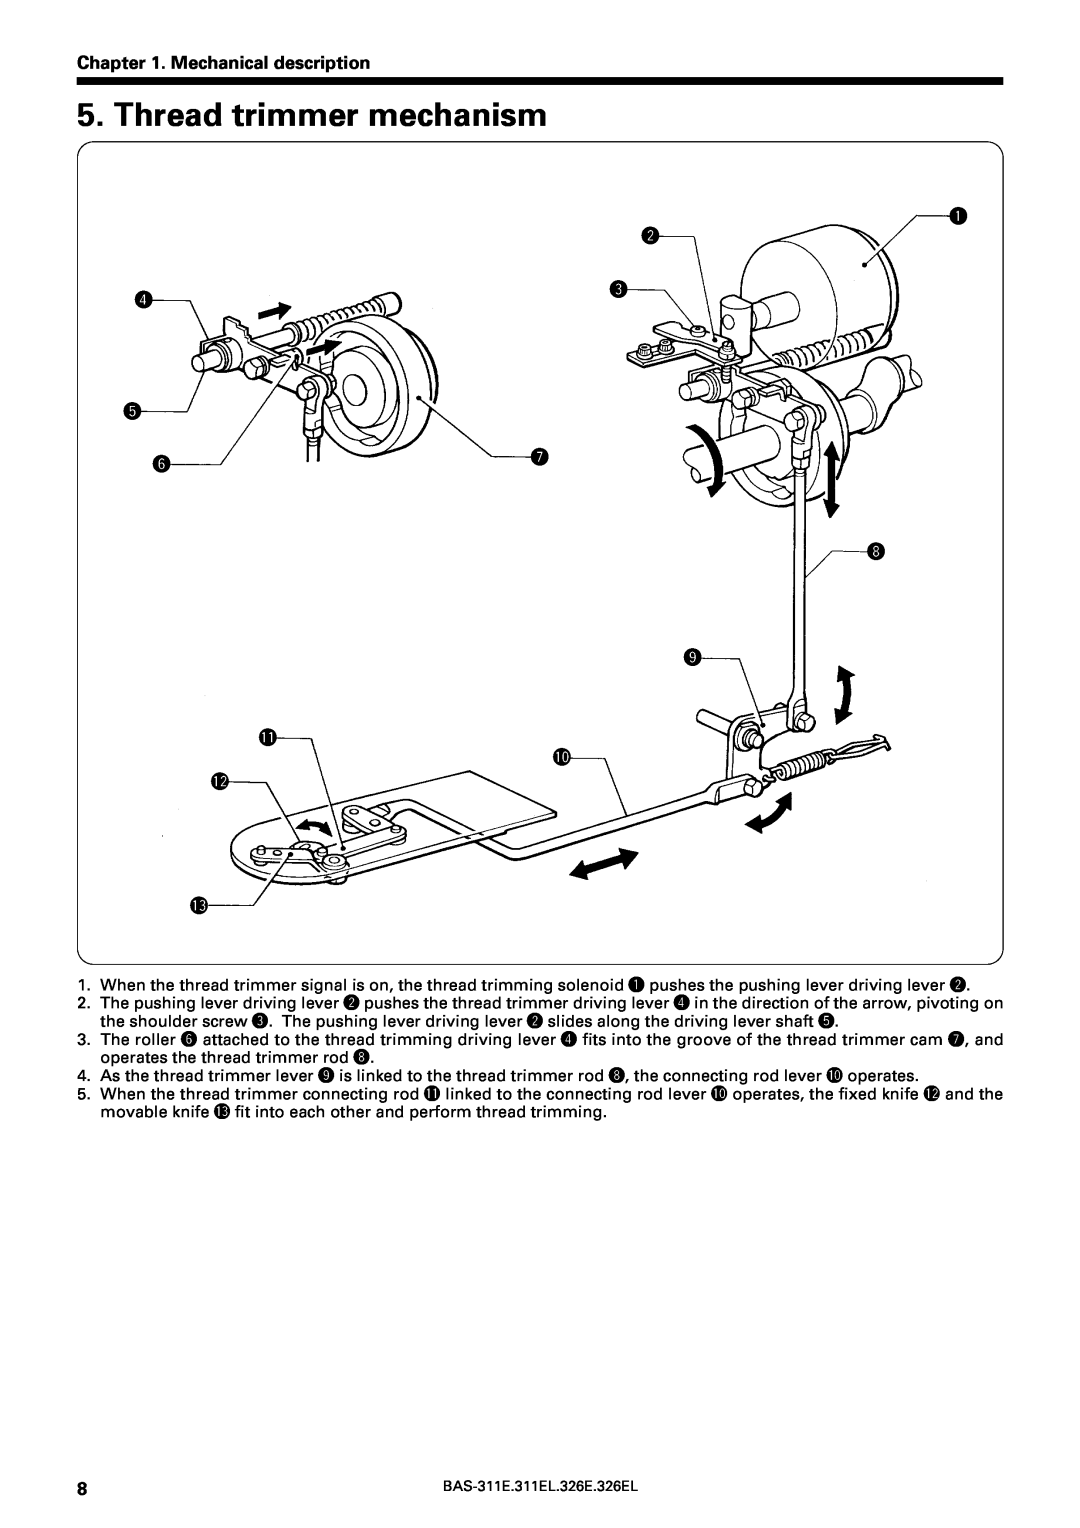 Brother BAS-311E service manual Thread trimmer mechanism, Mechanical description, t yu i o 